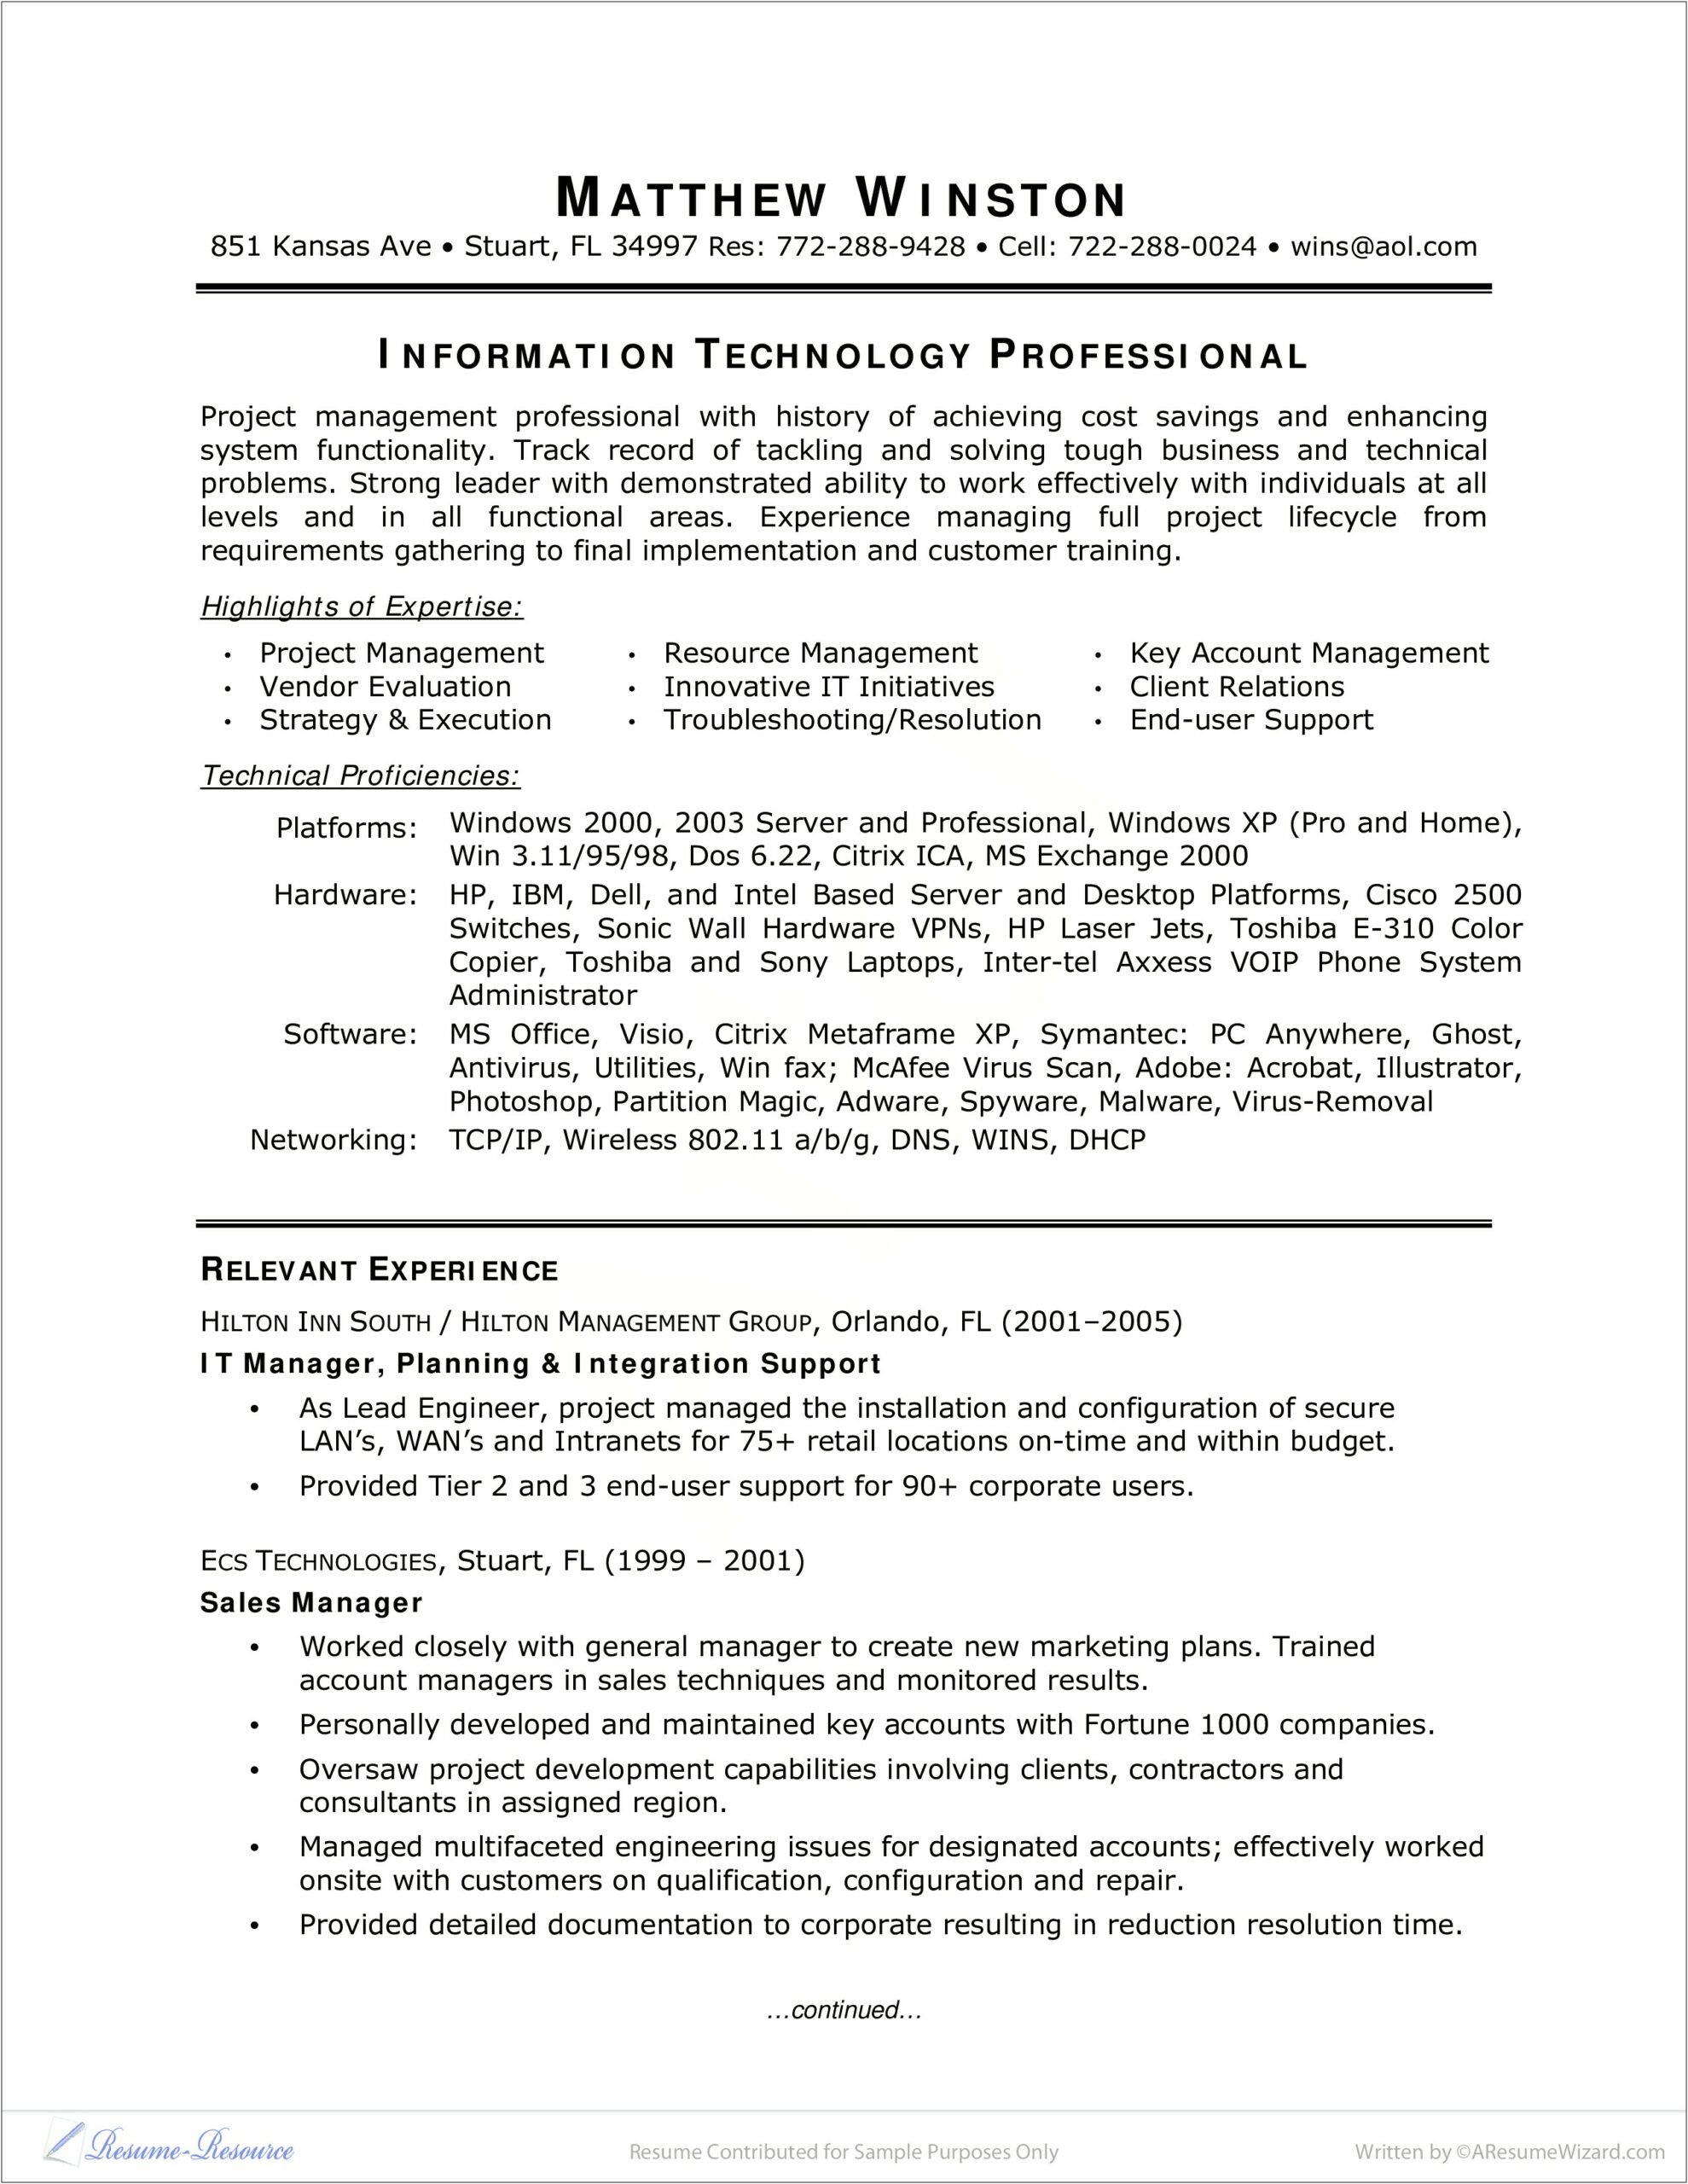 Functional Resume Sample For Information Technology